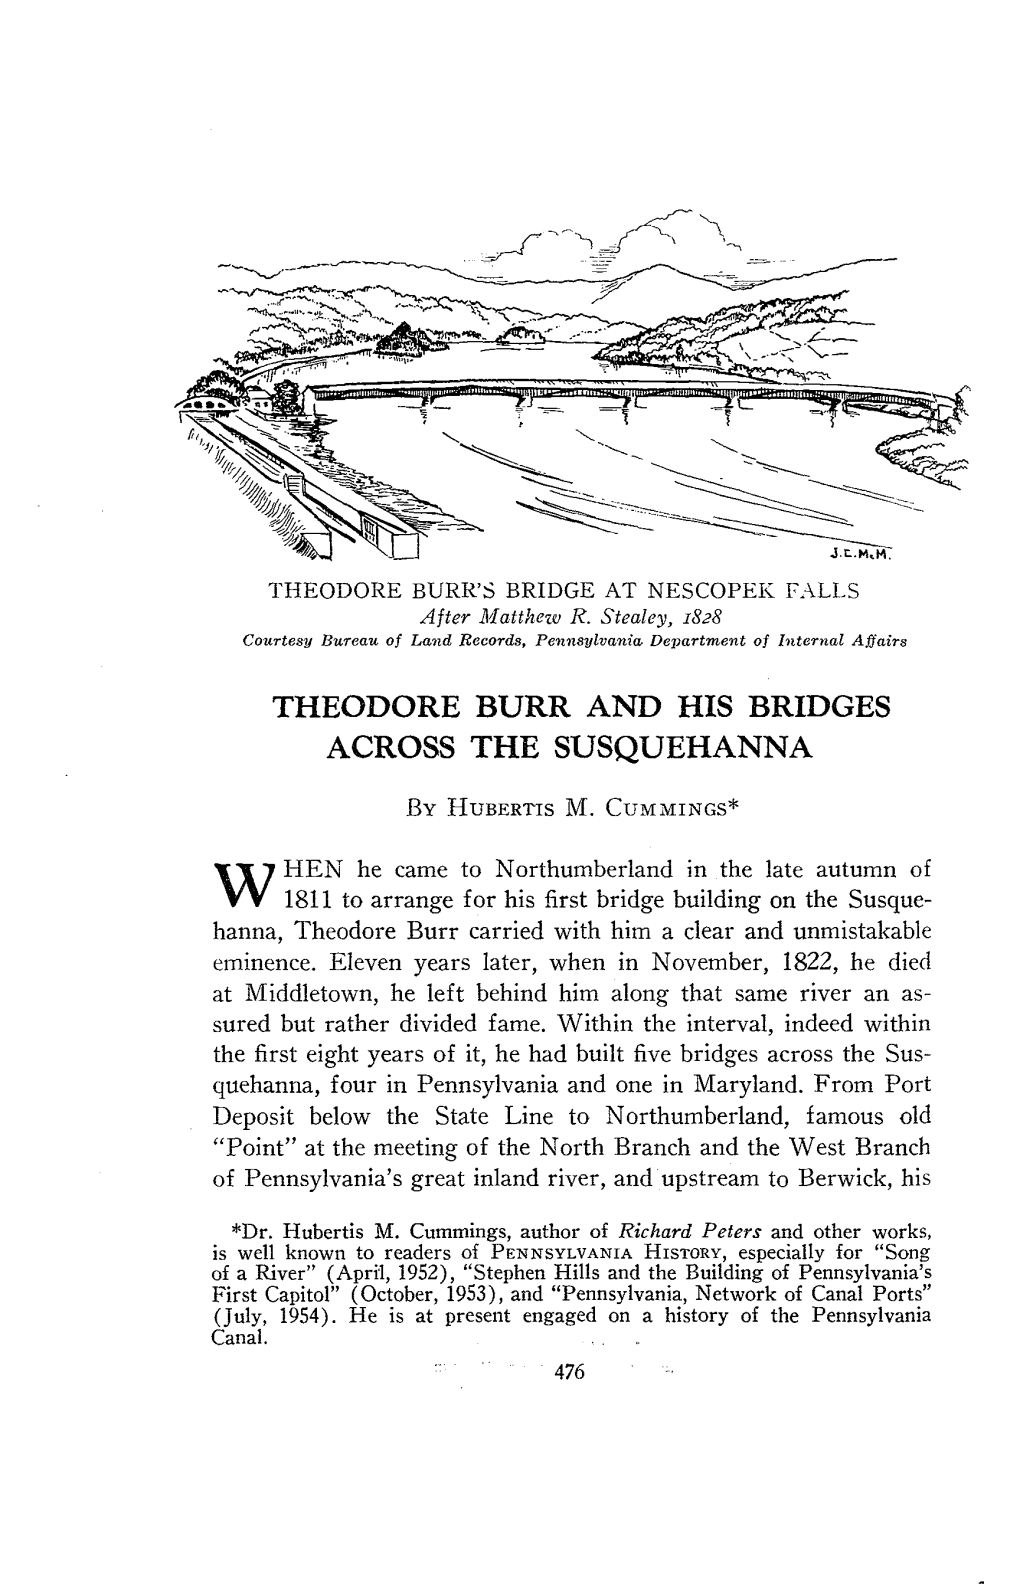 Theodore Burr and His Bridges Across the Susquehanna